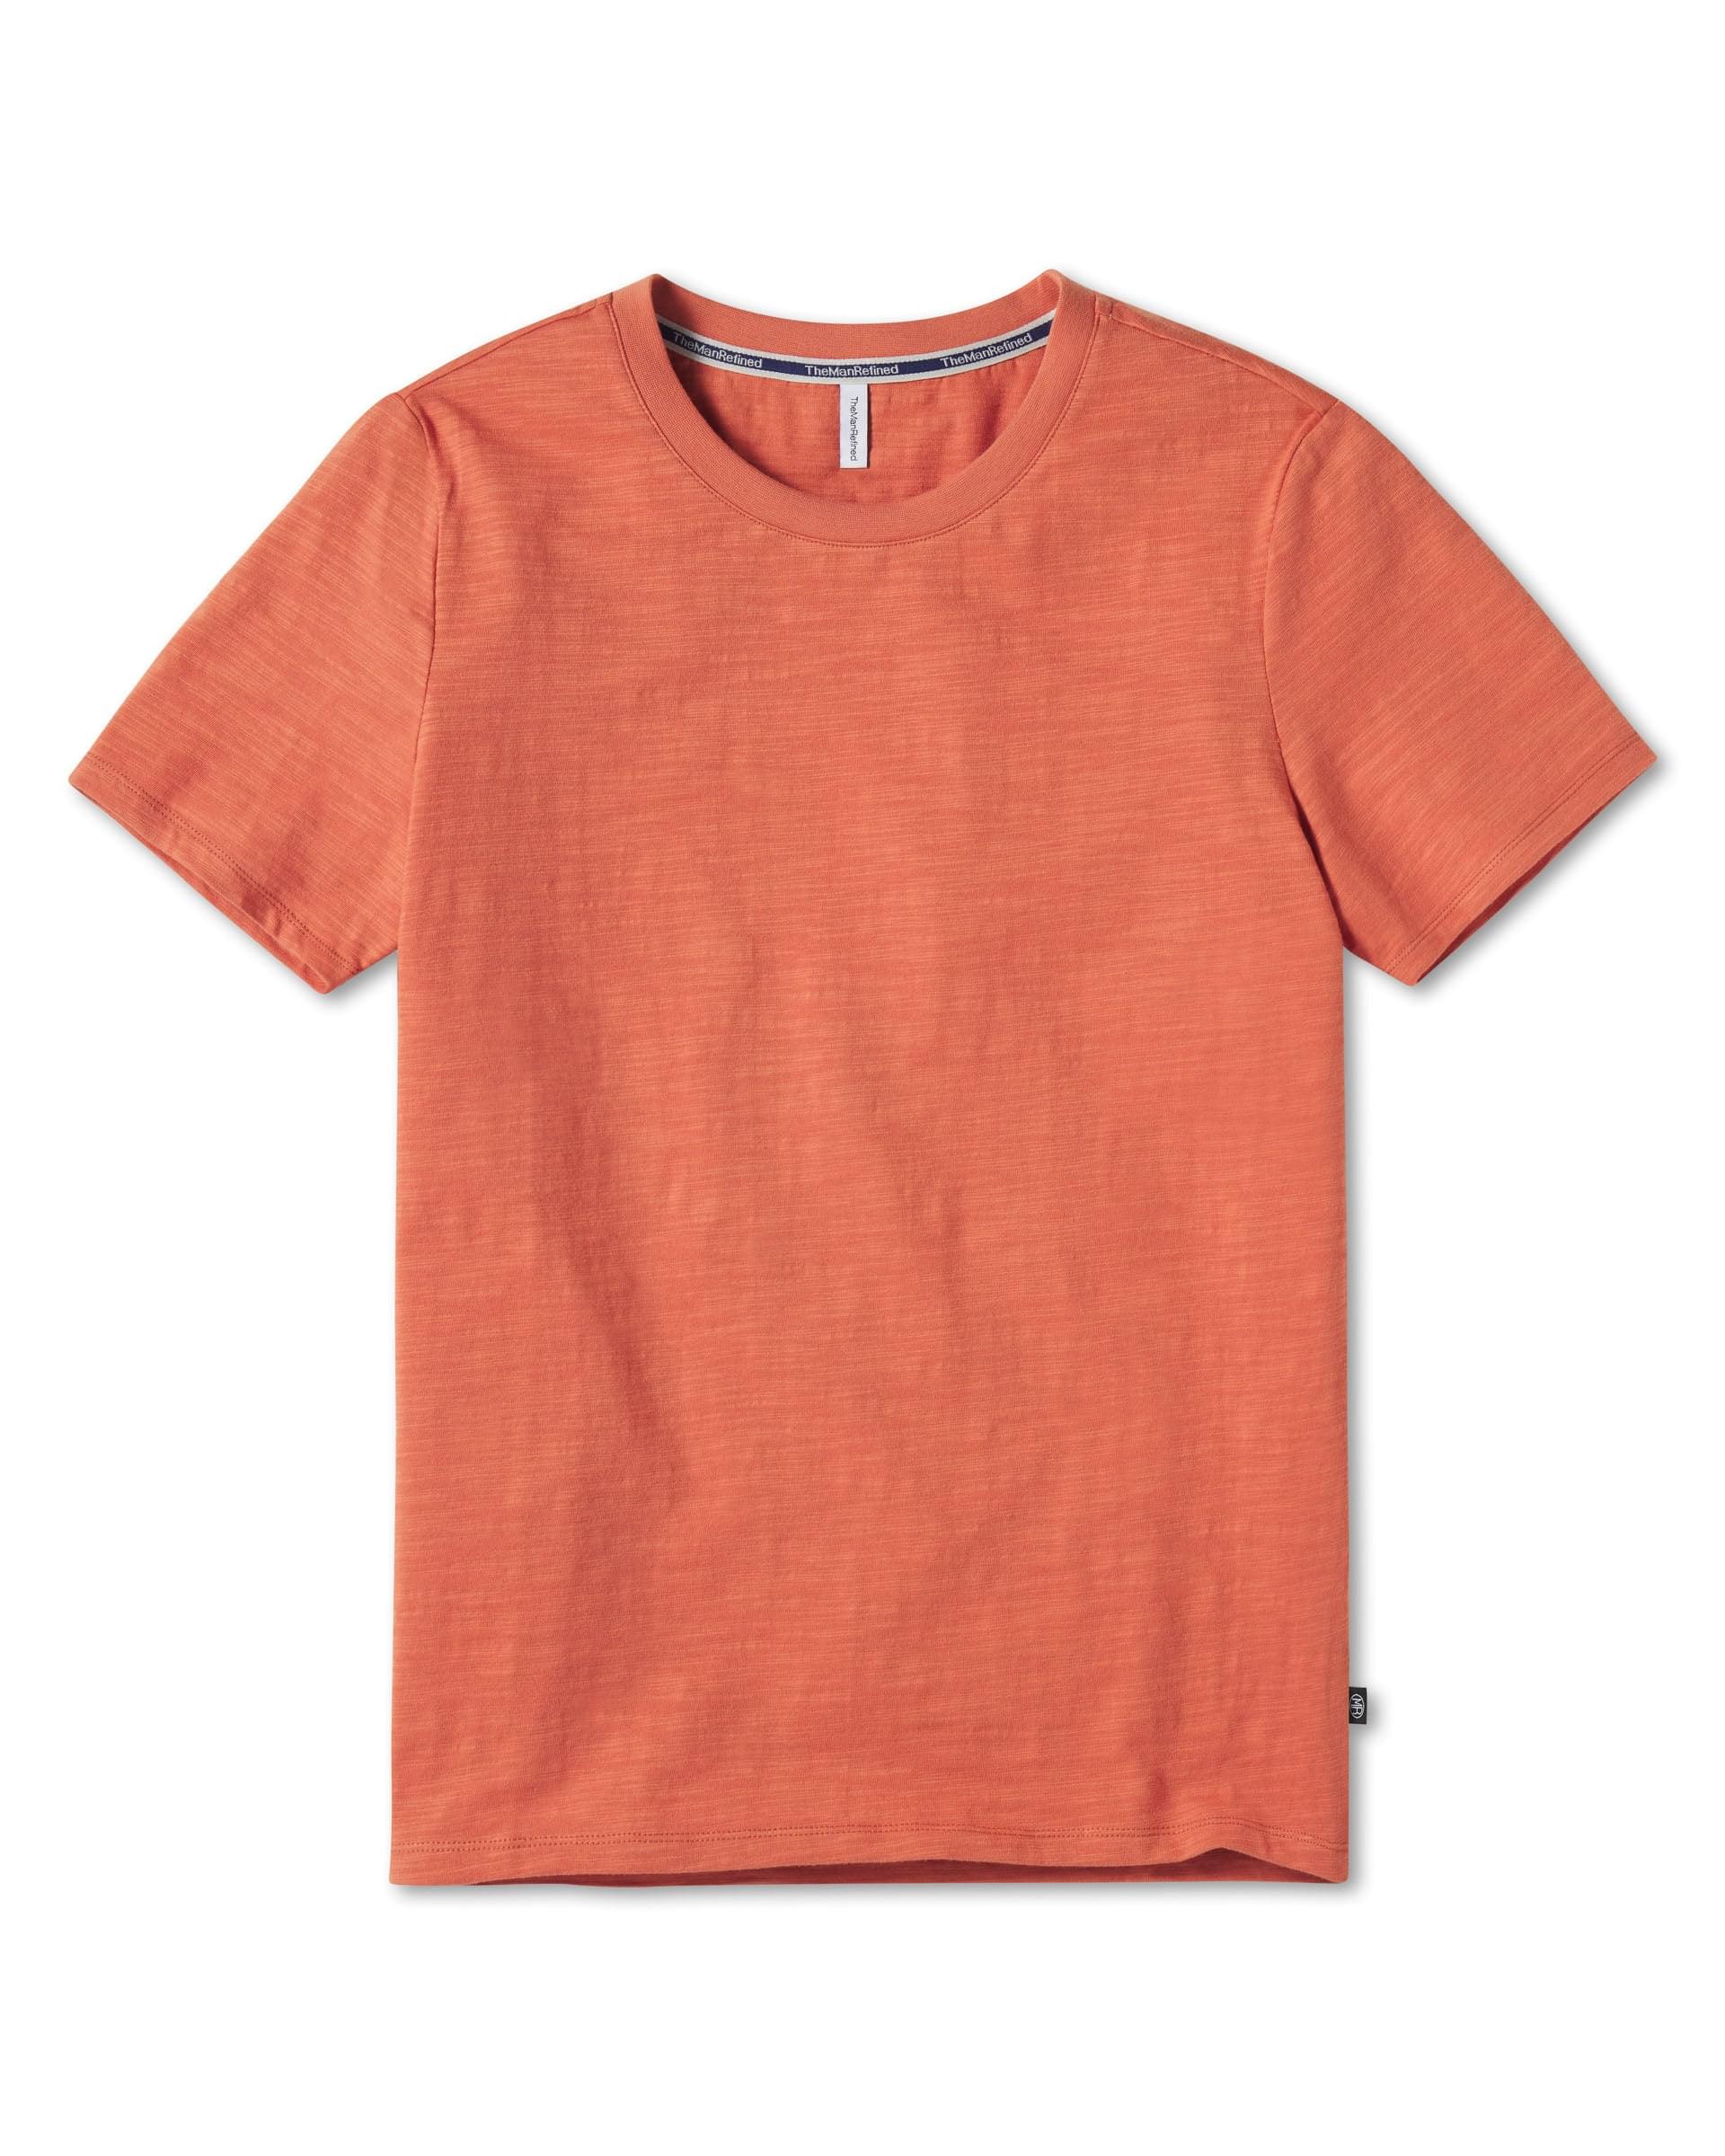 Crewneck Slub - Apricot Cotton | T-Shirt Jersey Refined Man The